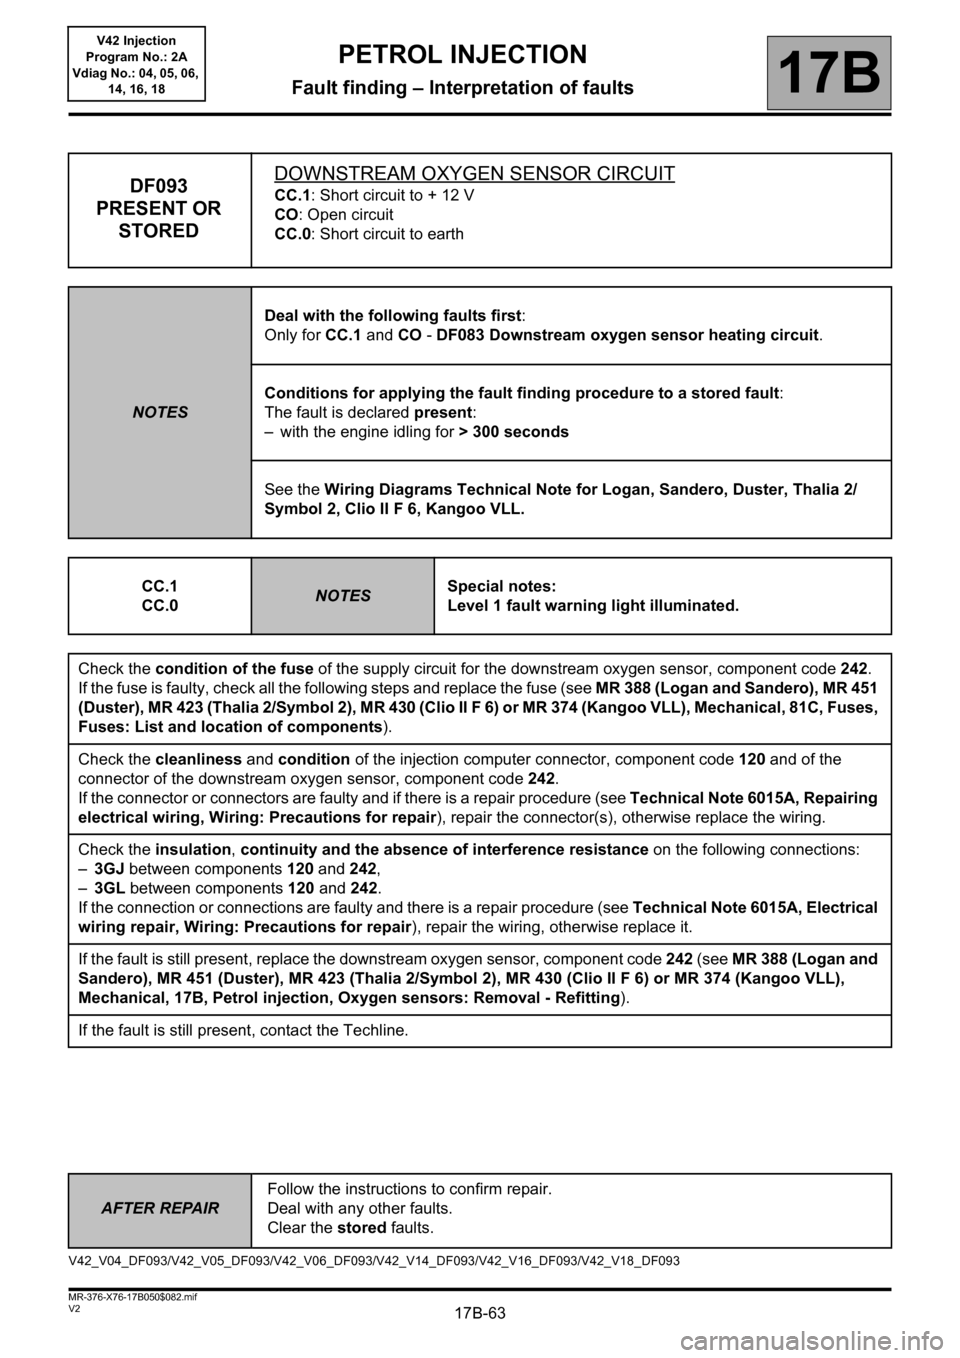 RENAULT KANGOO 2013 X61 / 2.G Petrol V42 Injection Workshop Manual 17B-63V2 MR-376-X76-17B050$082.mif
PETROL INJECTION
Fault finding – Interpretation of faults17B
V42 Injection
Program No.: 2A
Vdiag No.: 04, 05, 06, 
14, 16, 18
AFTER REPAIRFollow the instructions t